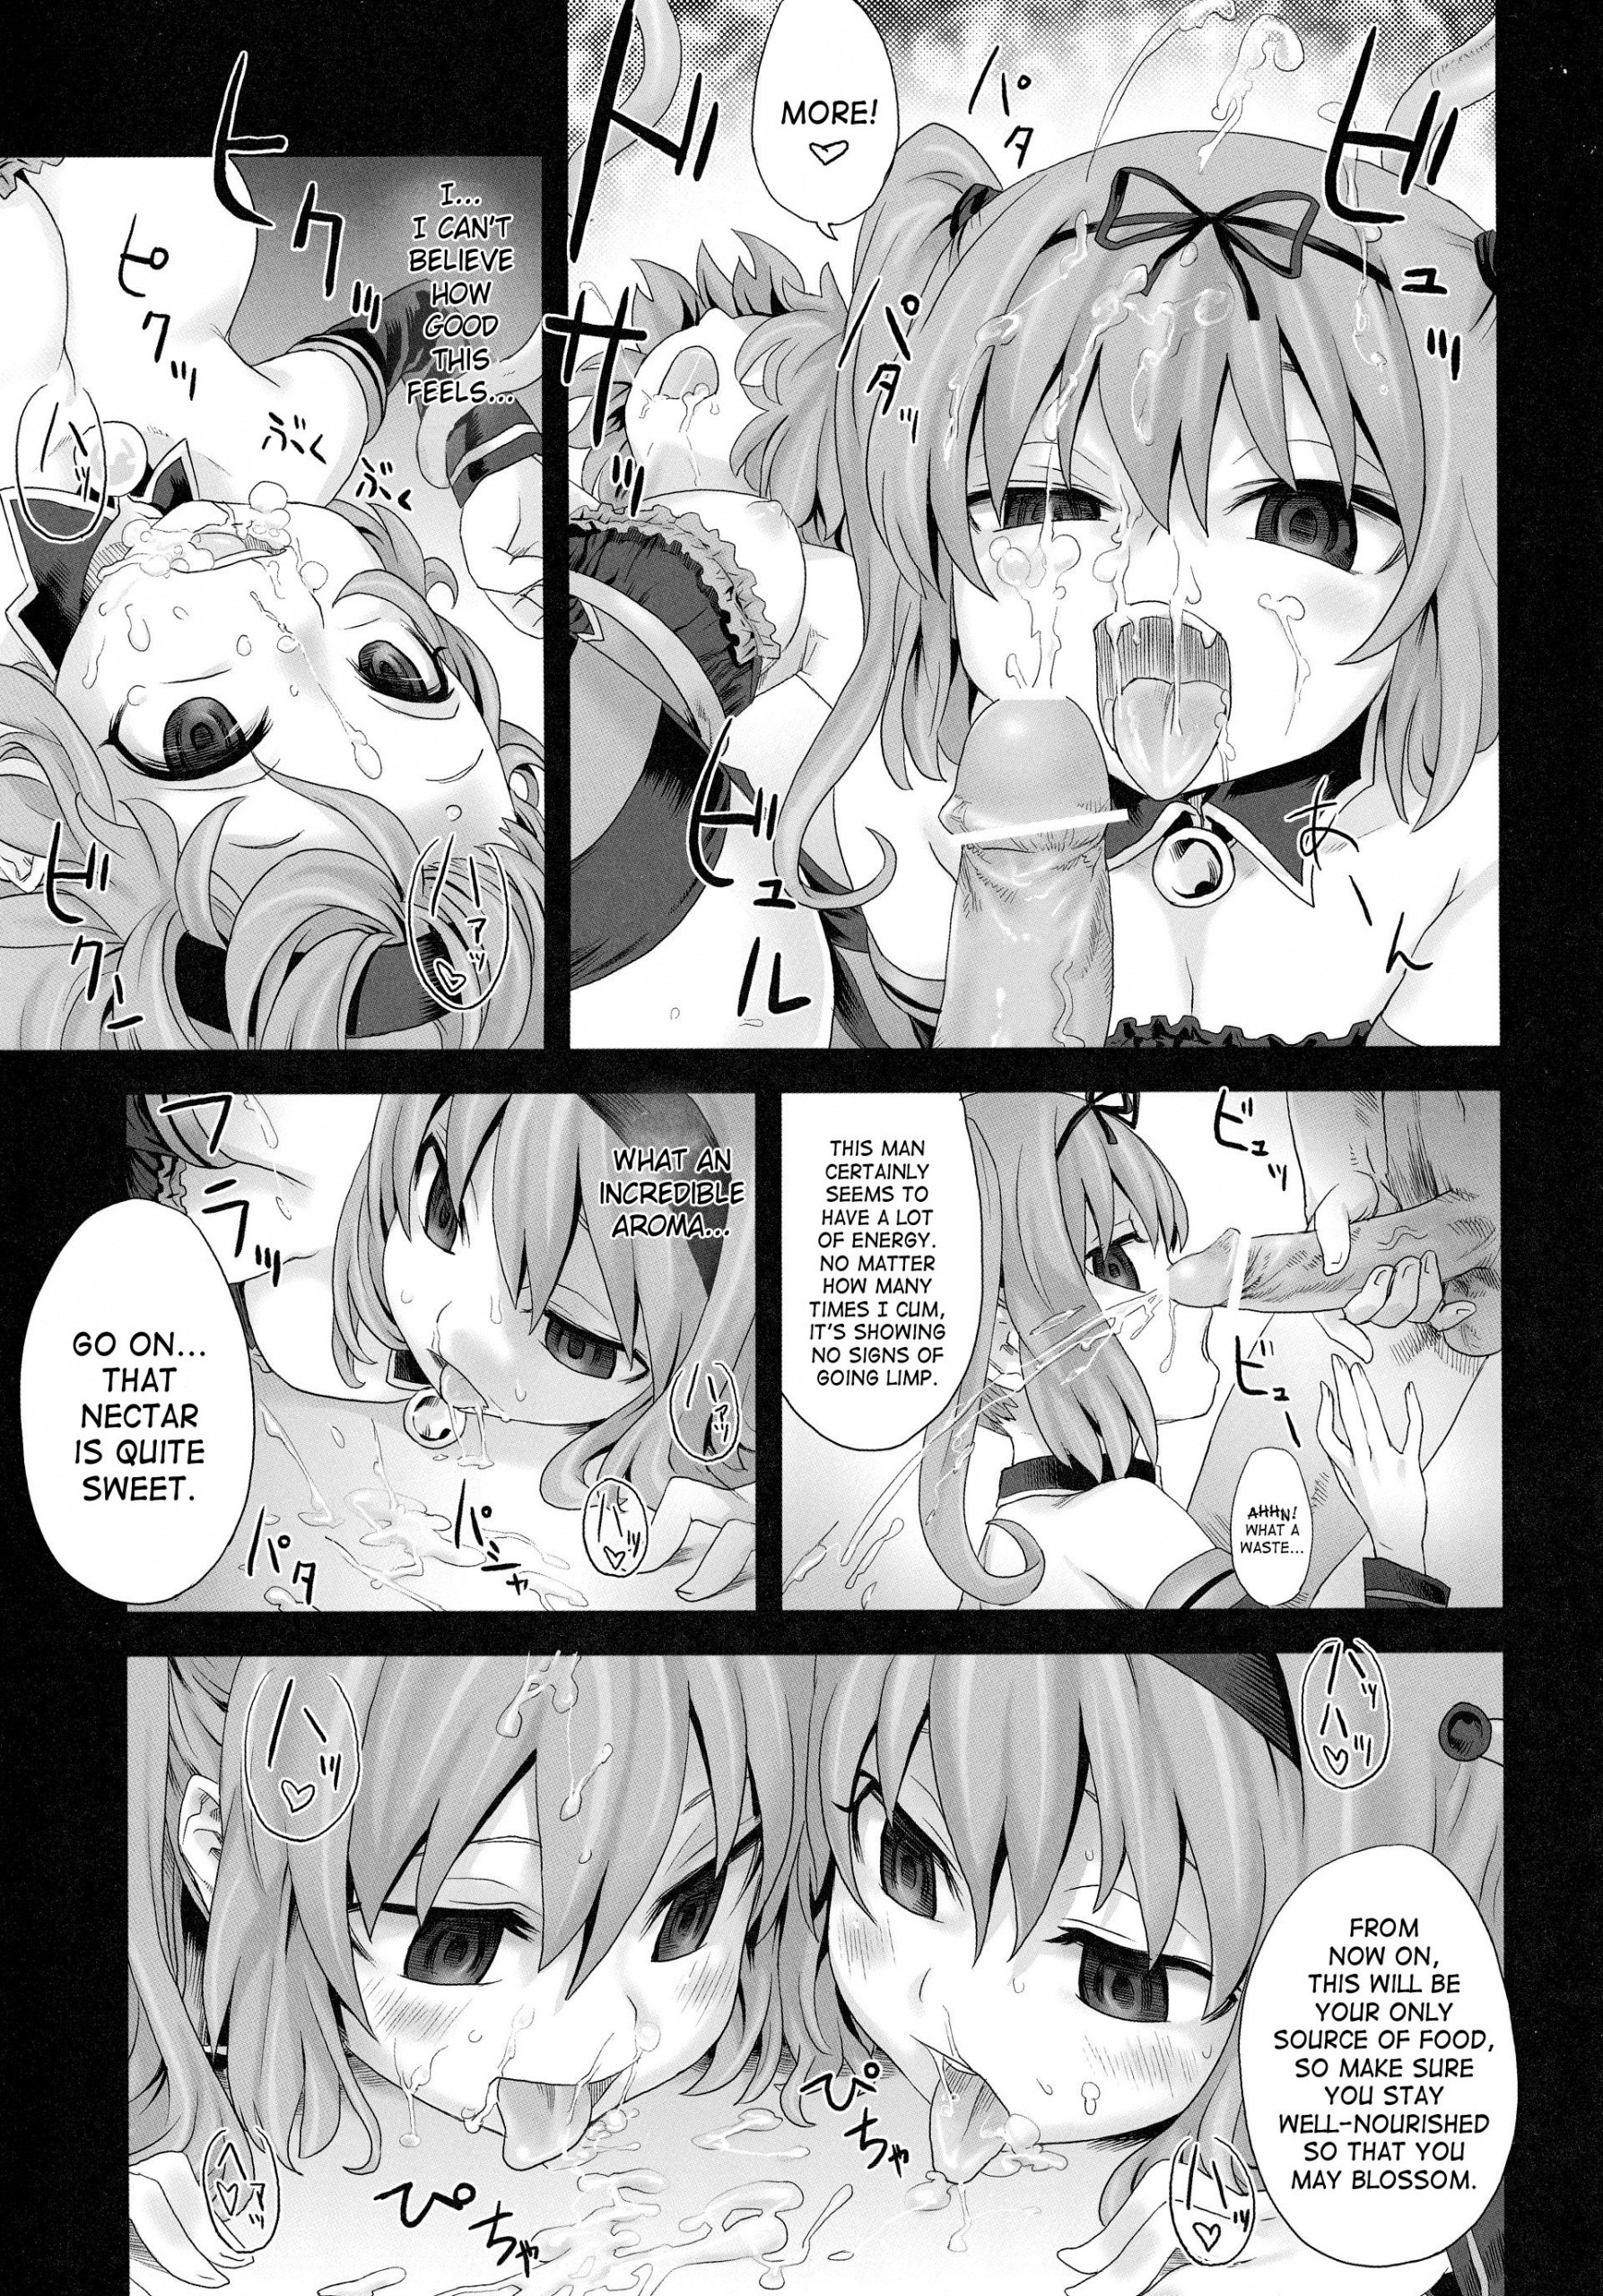 Victim Girls 8 - Venus Trap hentai manga picture 12